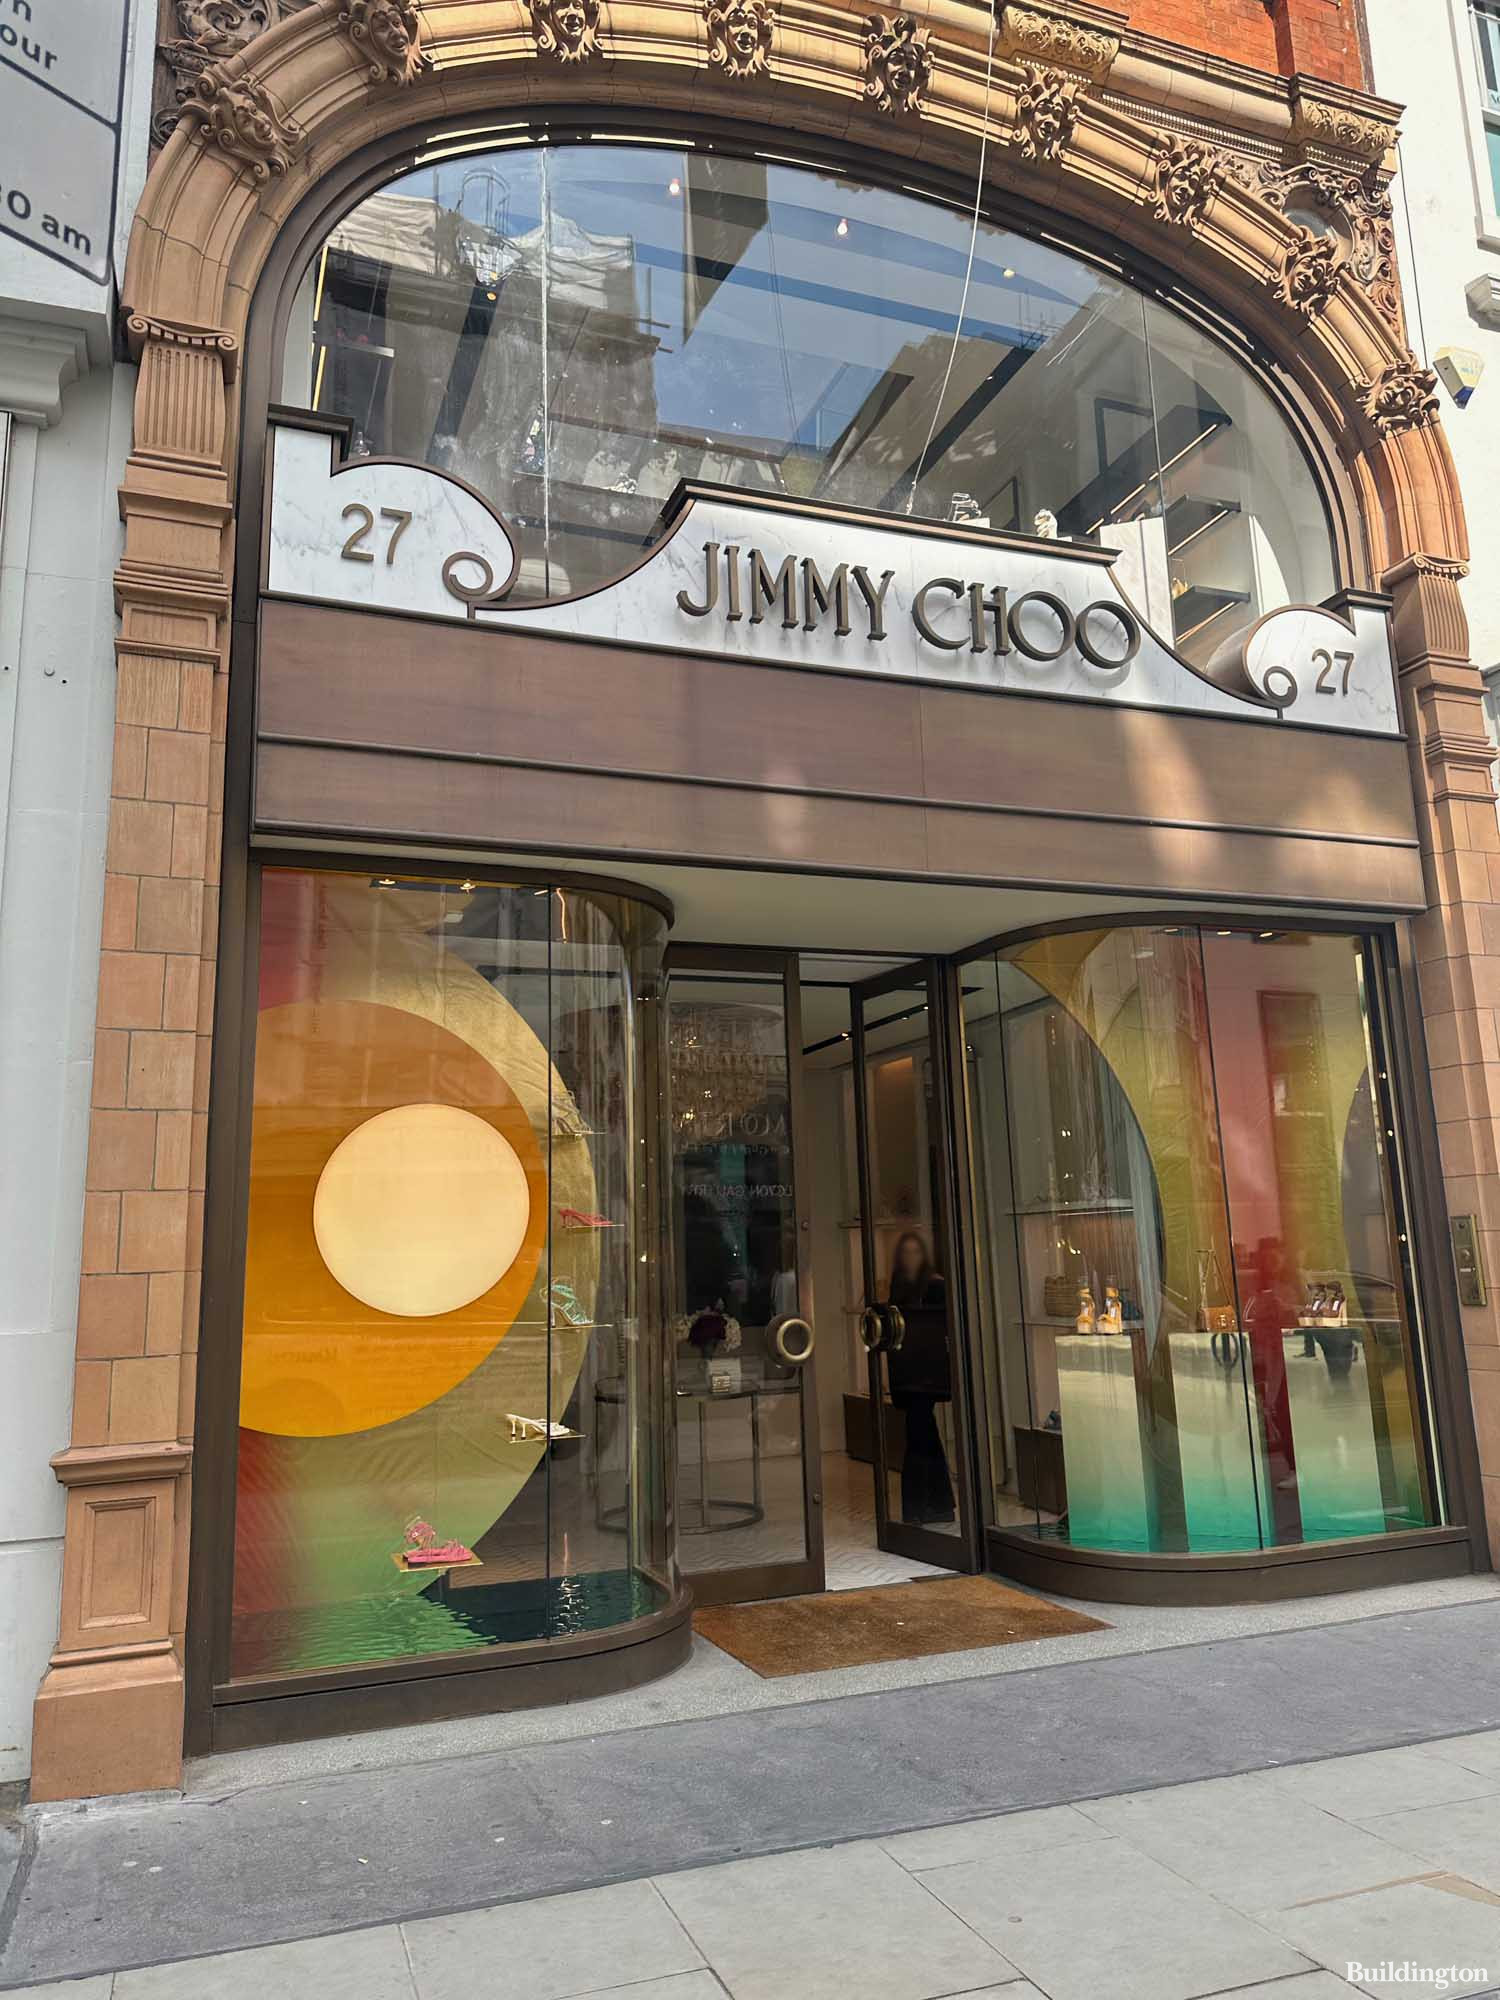 Jimmy Choo store entrance at 27 New Bond Street building in Mayfair, London W1.